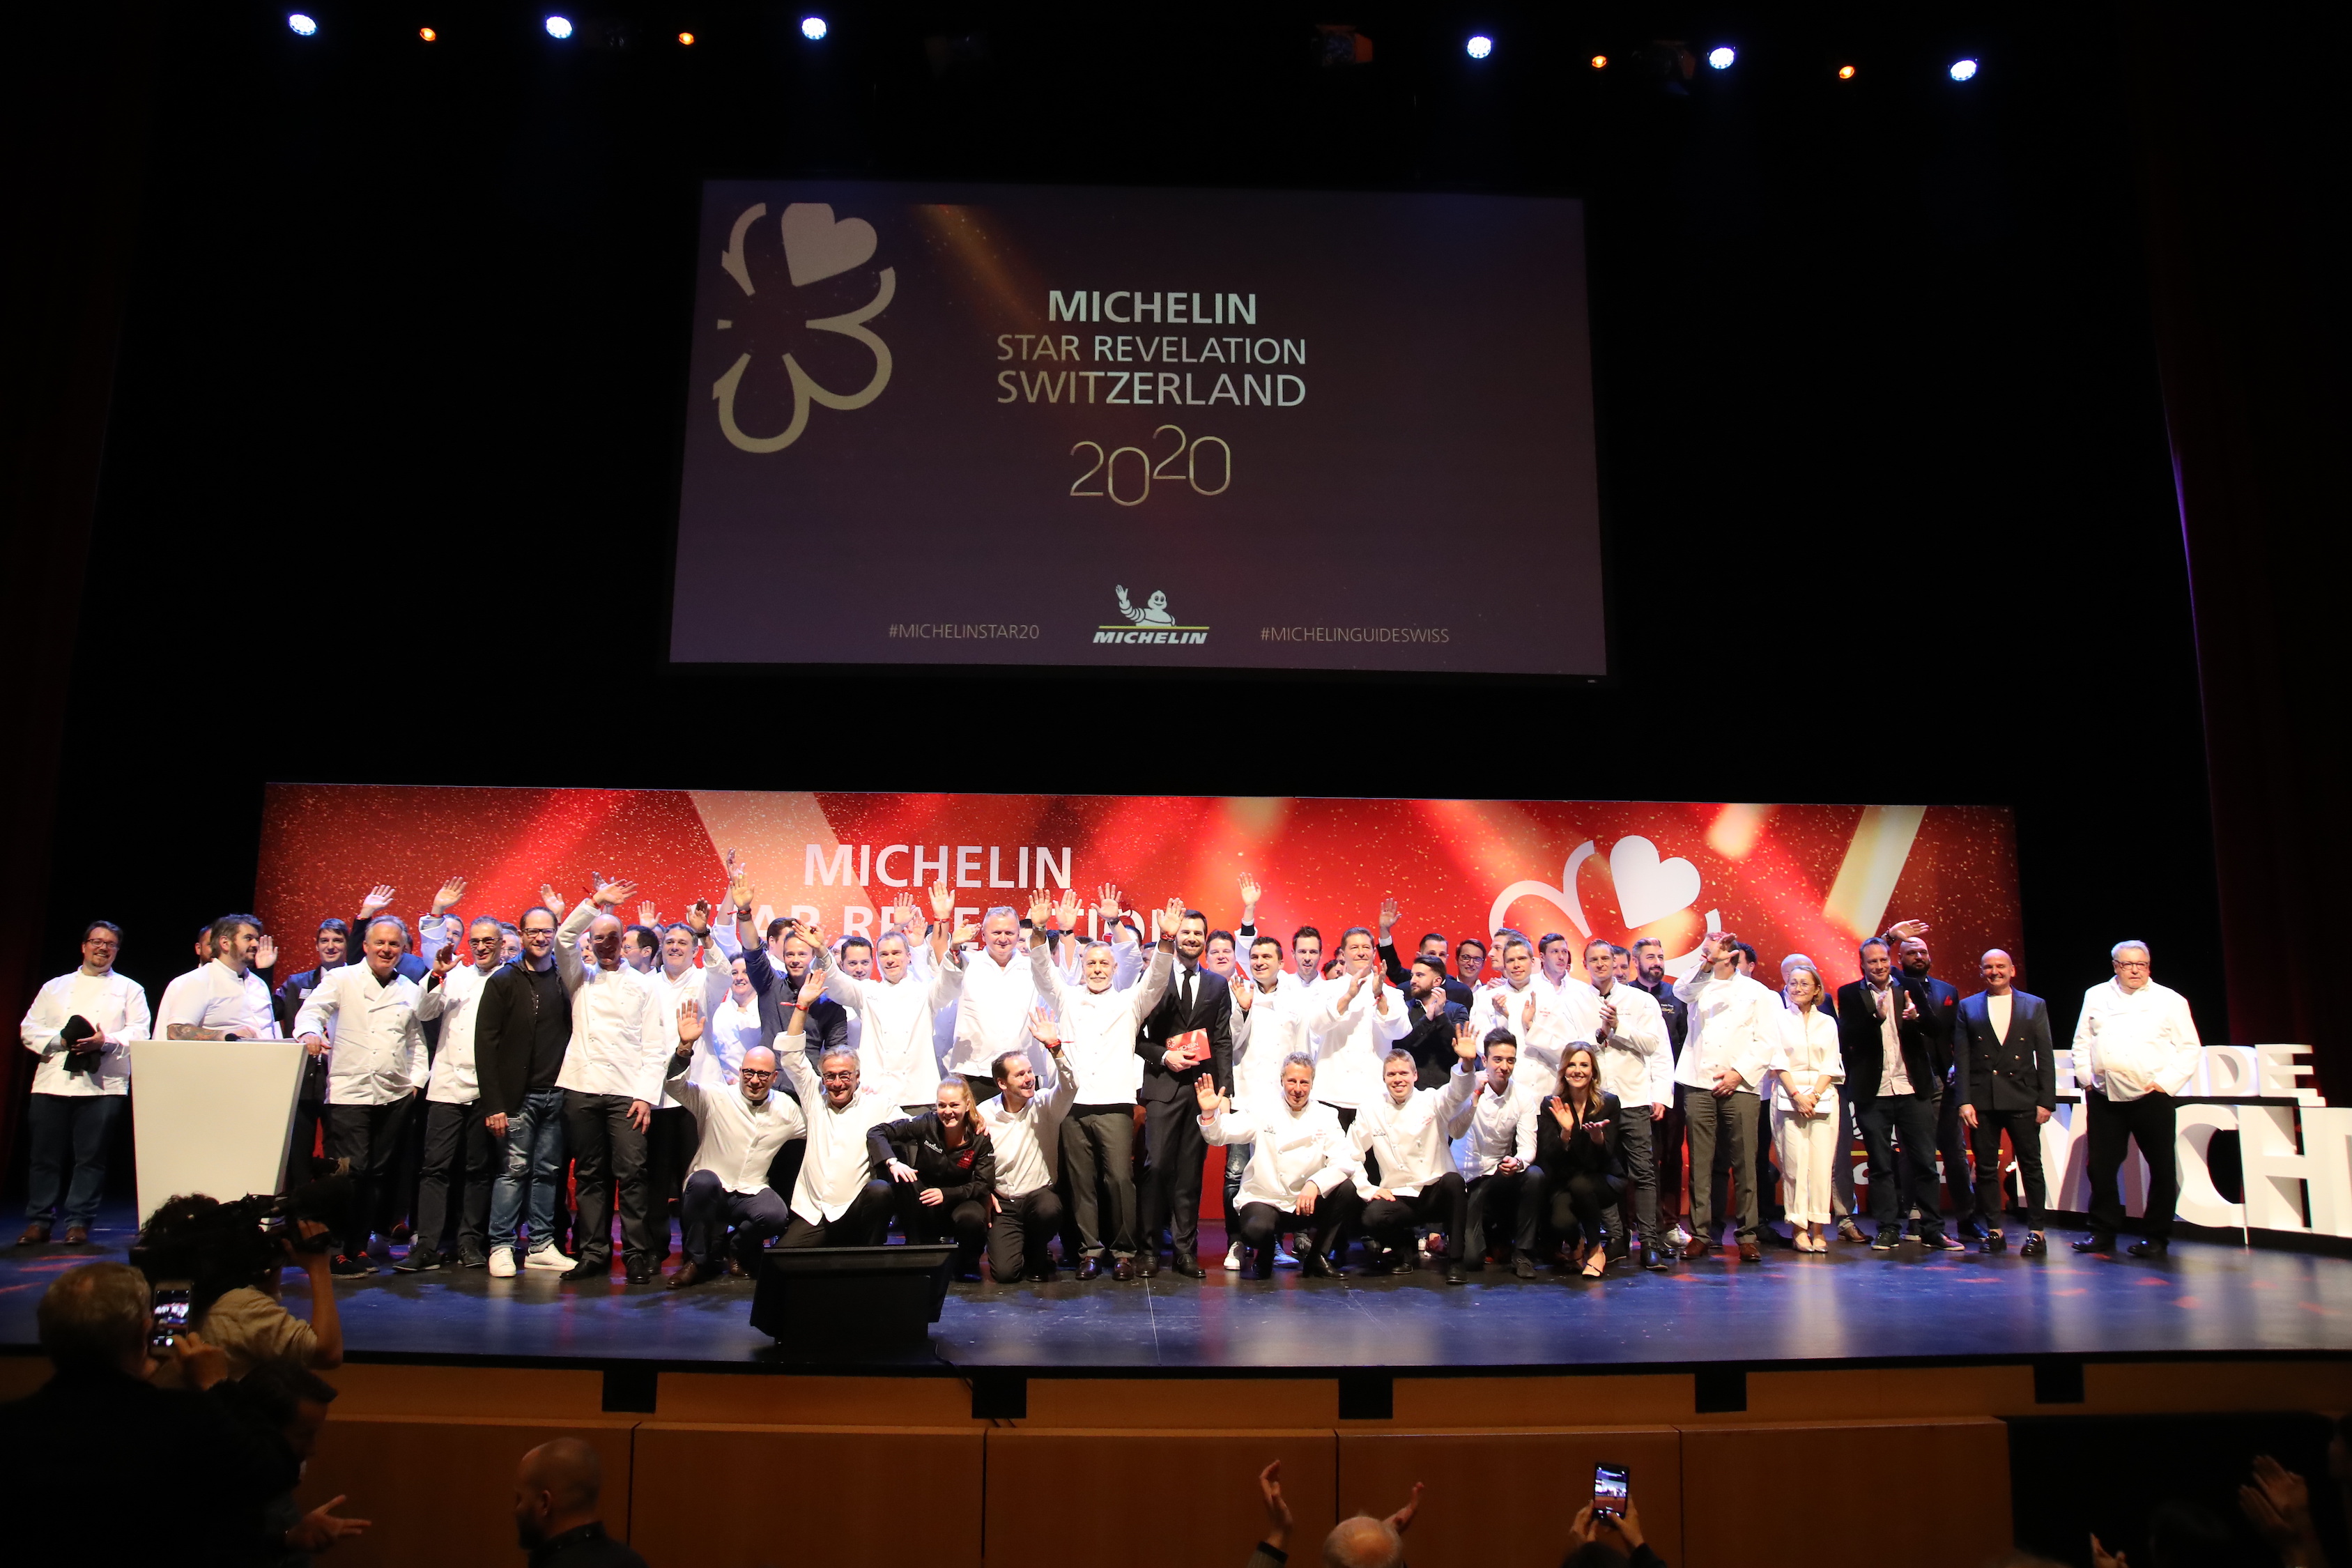 The Michelin Star Revelation ceremony in Lugano, Switzerland